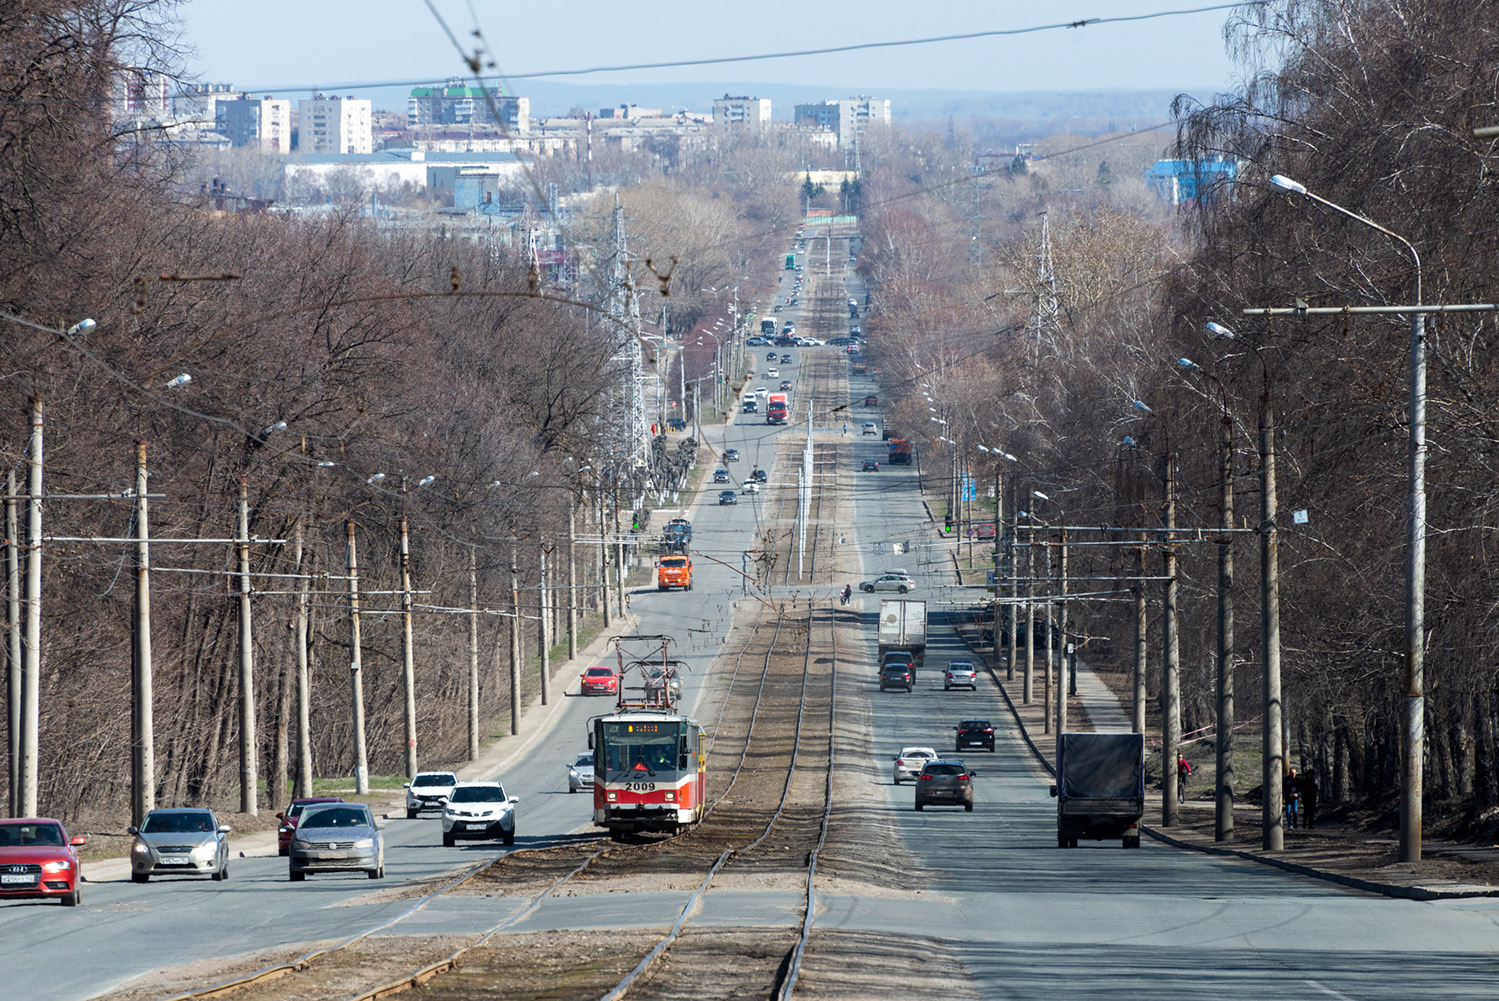 Ufa — Tramway network — North; Ufa — Trolleybus network — South